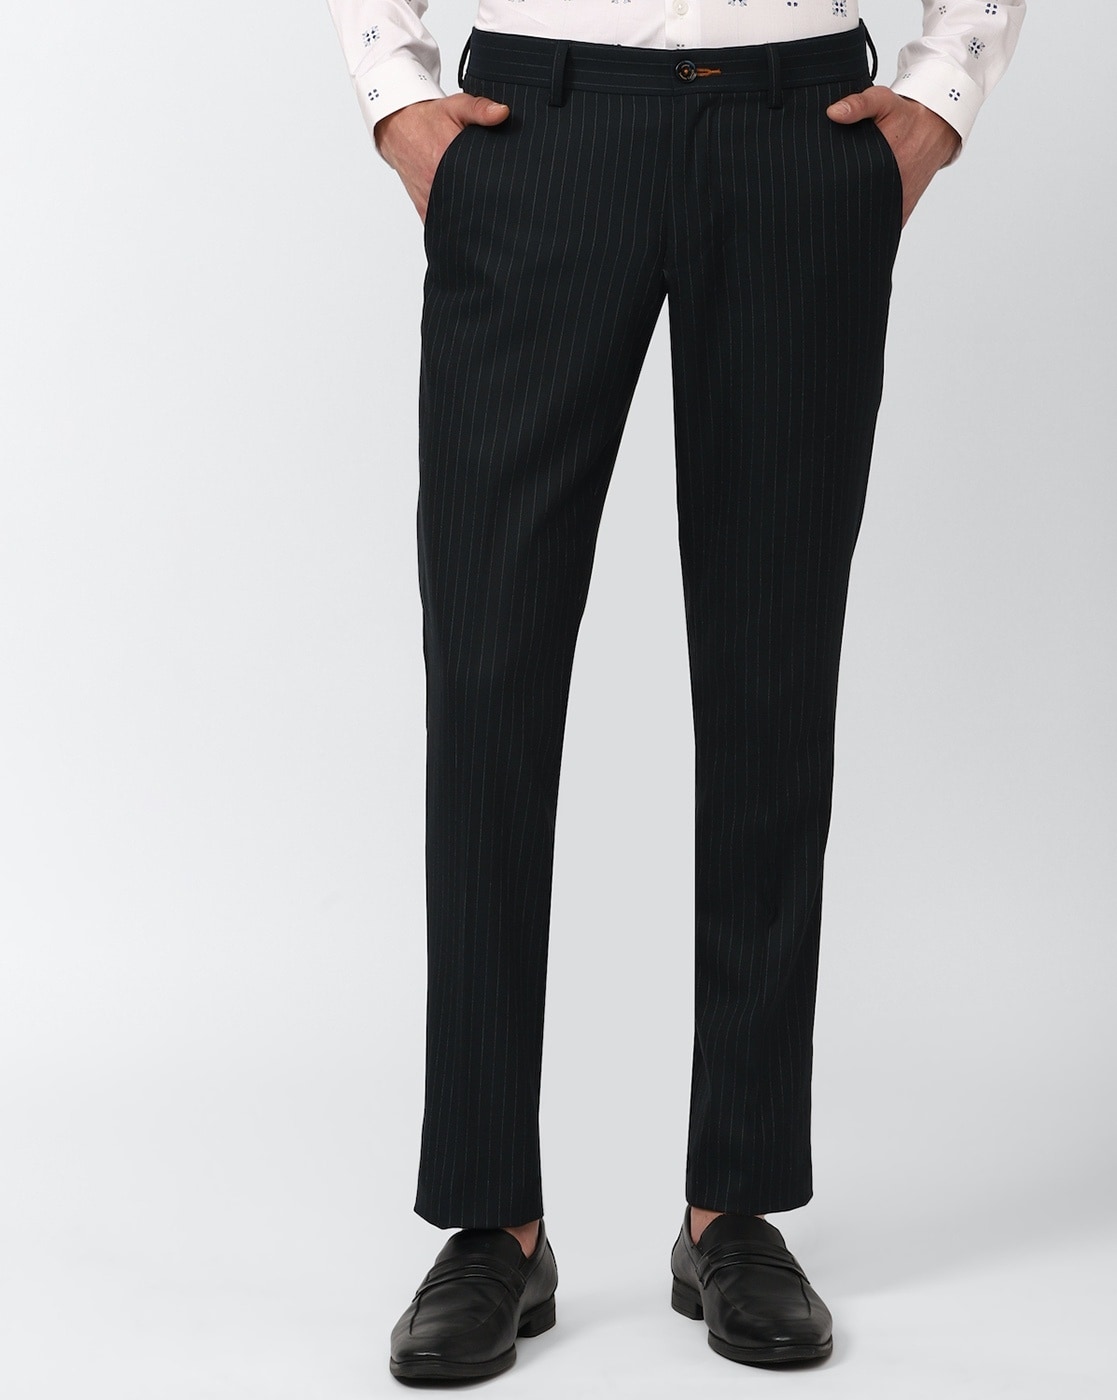 Men's Striped Pants Casual Skinny Fit Color Block Pencil Dress Trousers -  Walmart.com